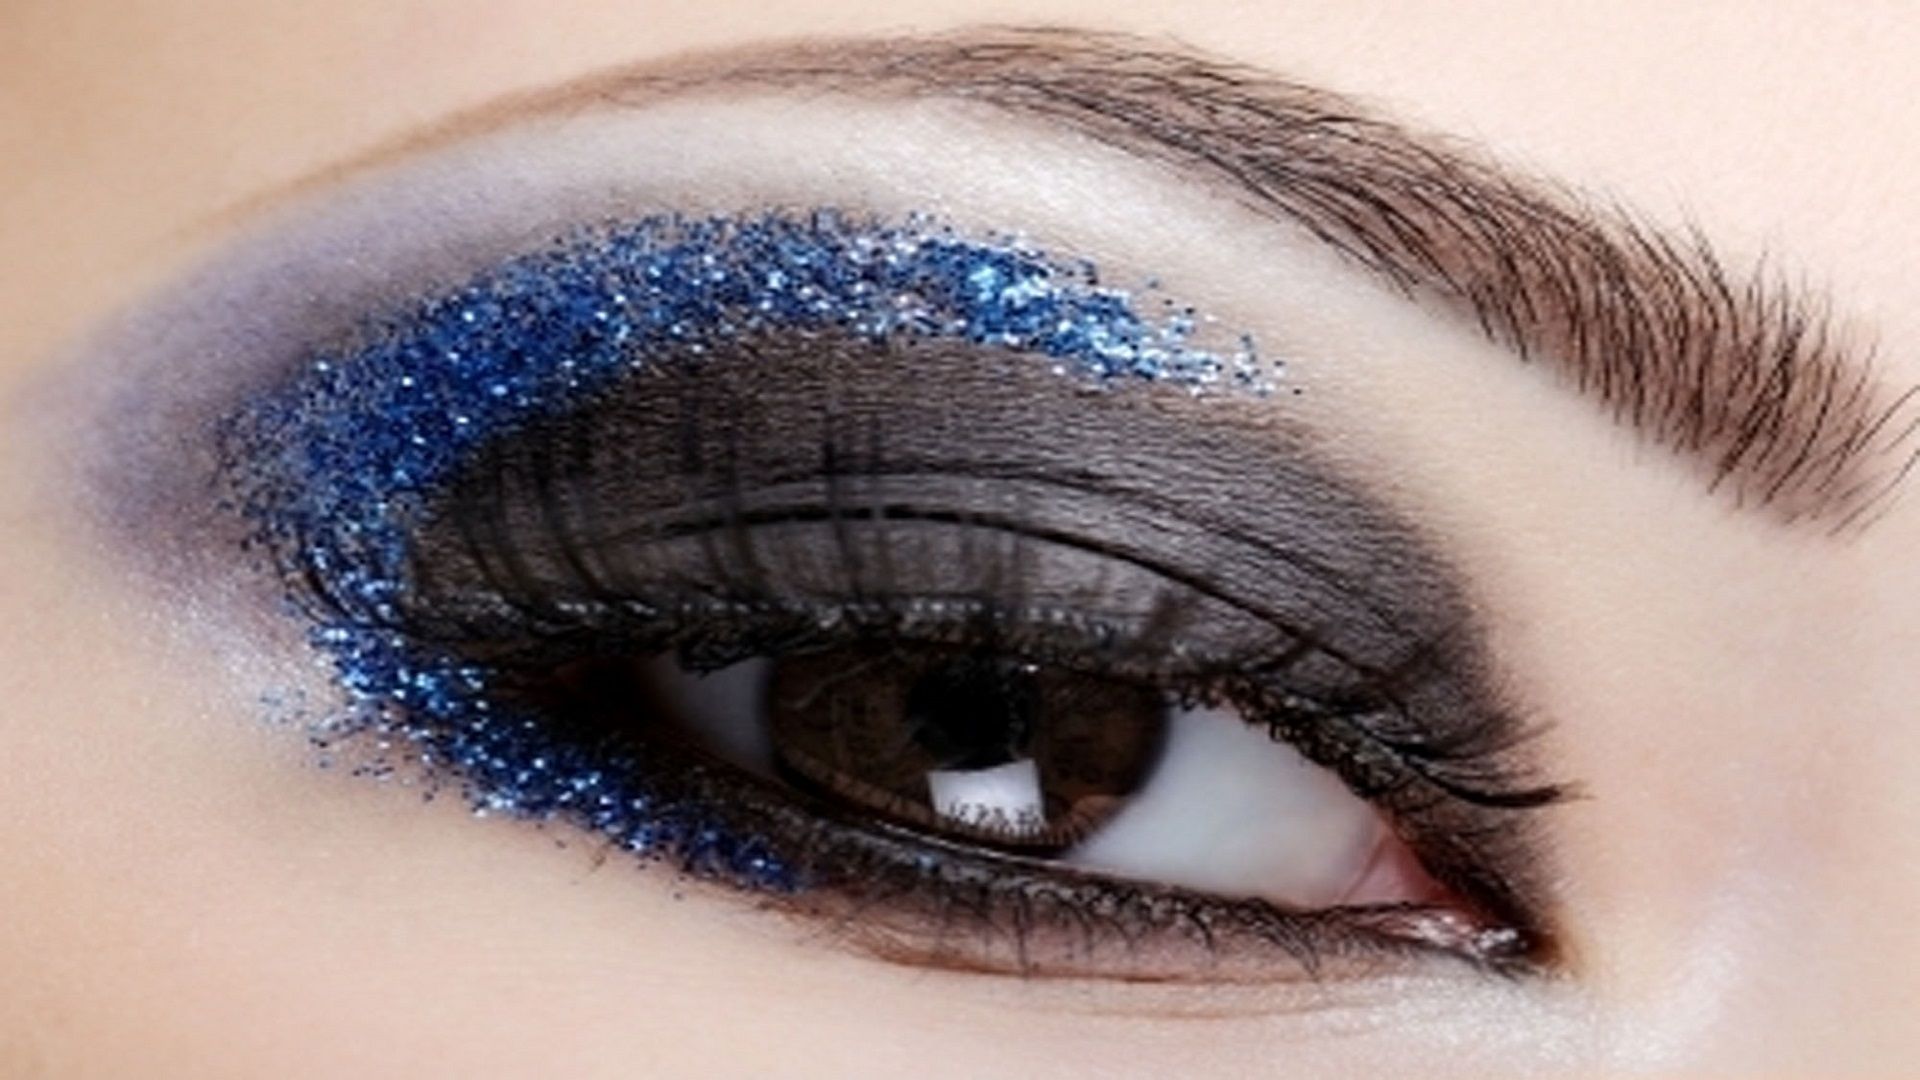 Bright Eye Makeup Of Blue Glitter Look Free Hd Wallpaper For Desktops